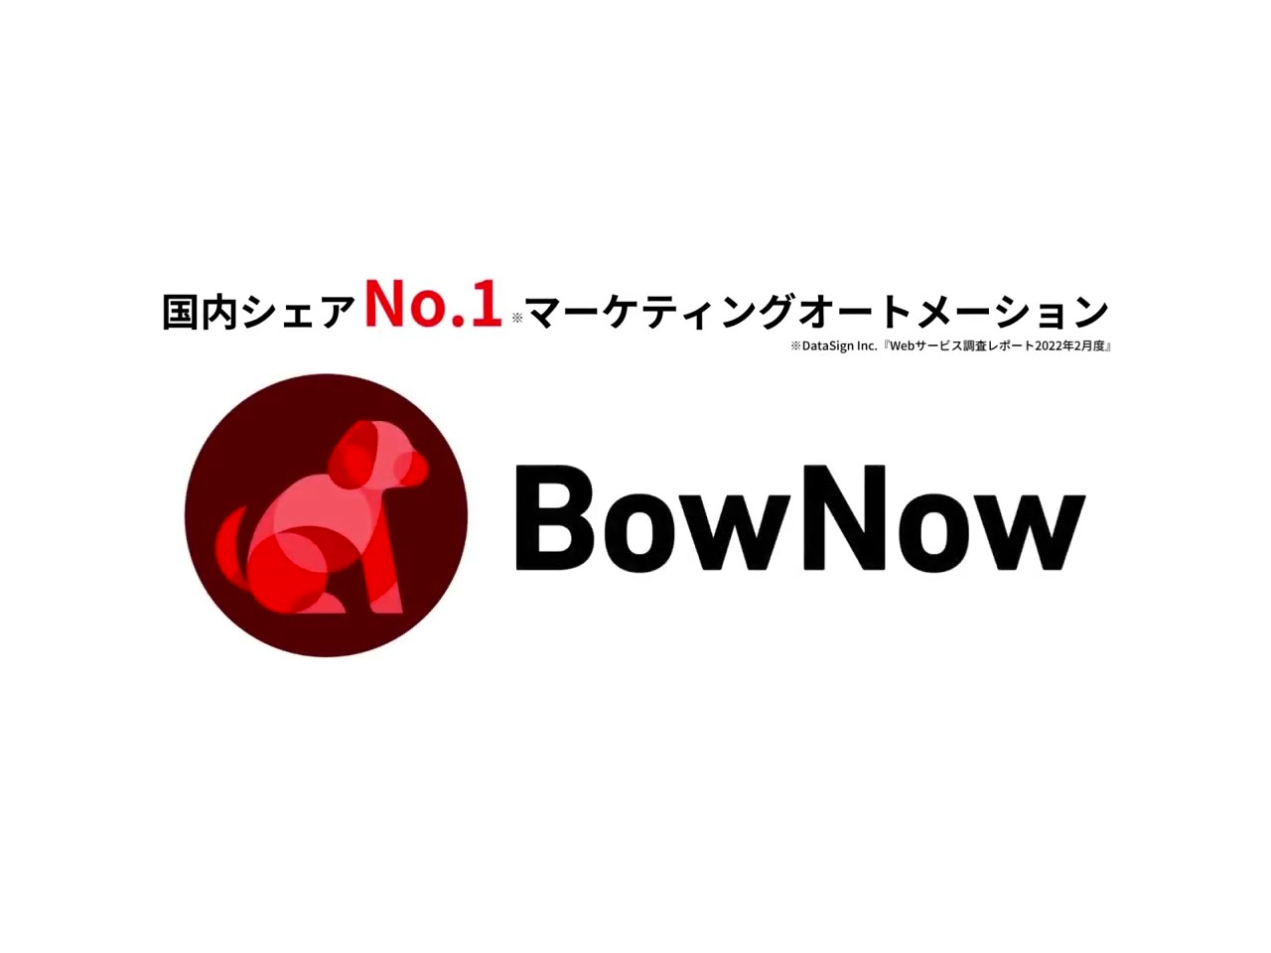 BowNow